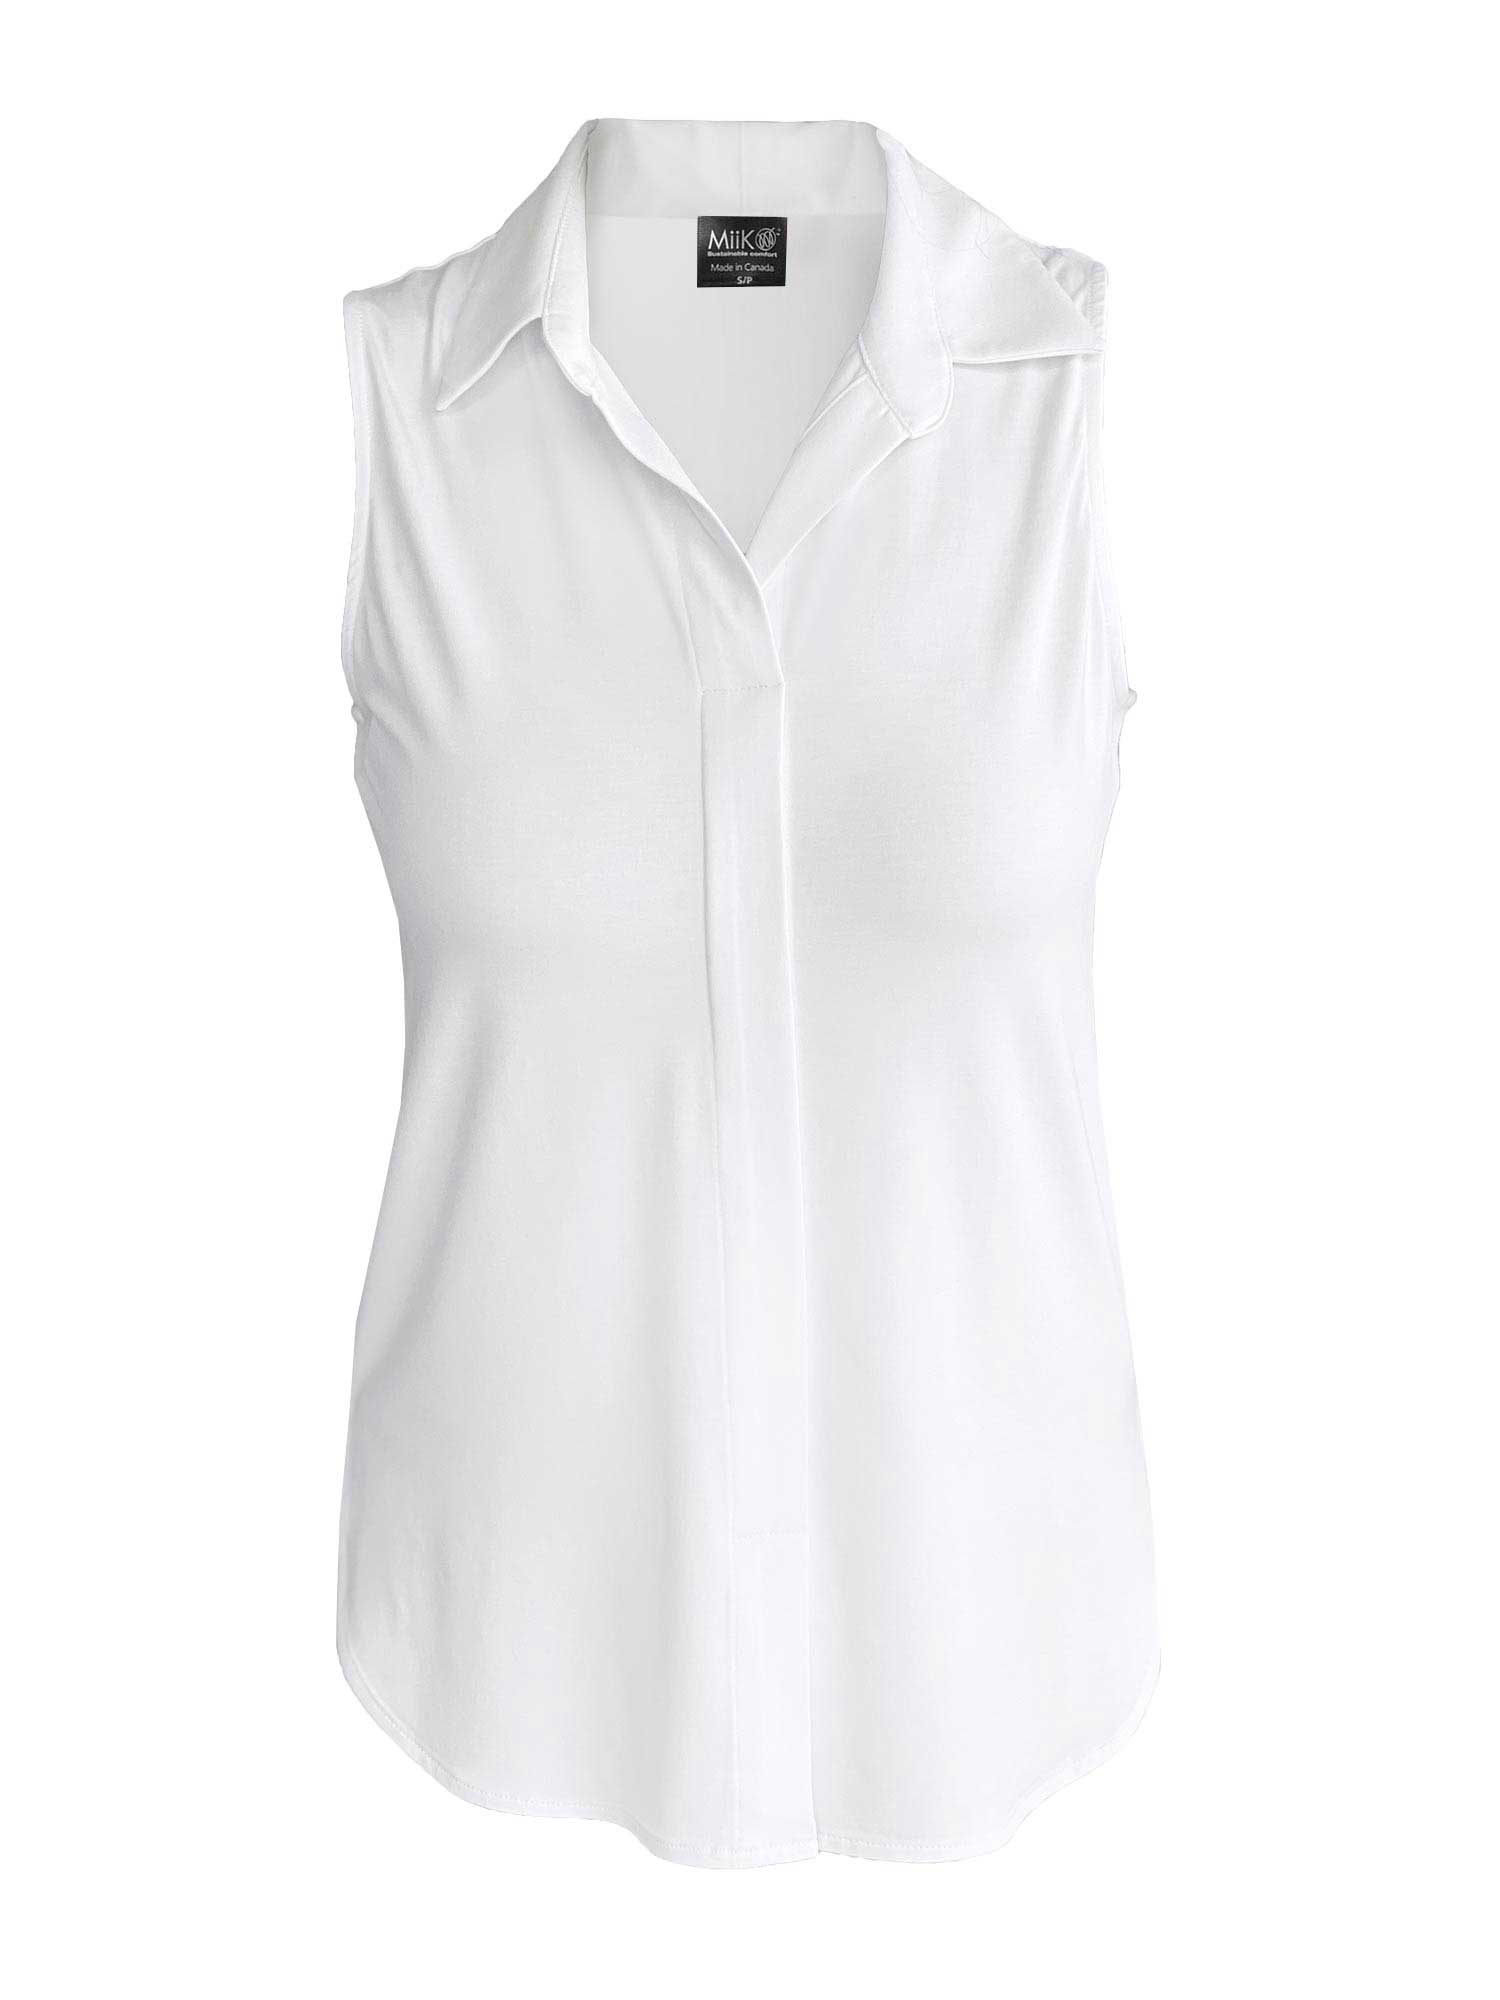 Mika sleeveless collared shirt | Sustainable women's fashion made 